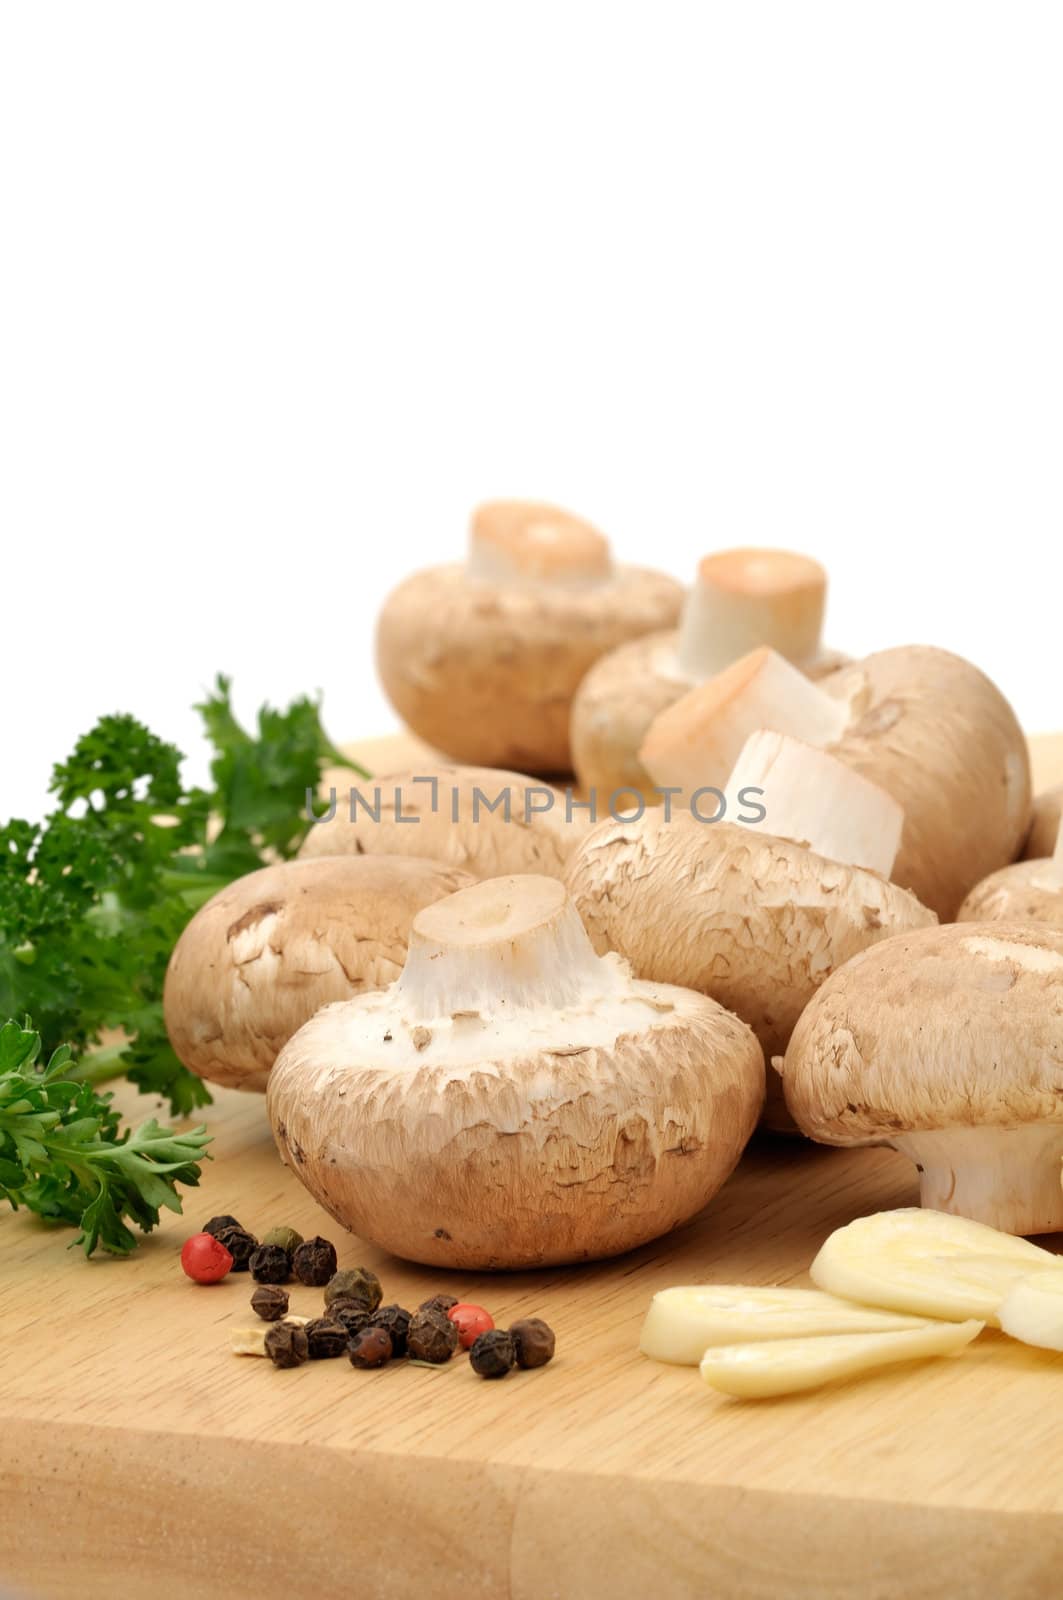 Mushrooms preparation by Hbak